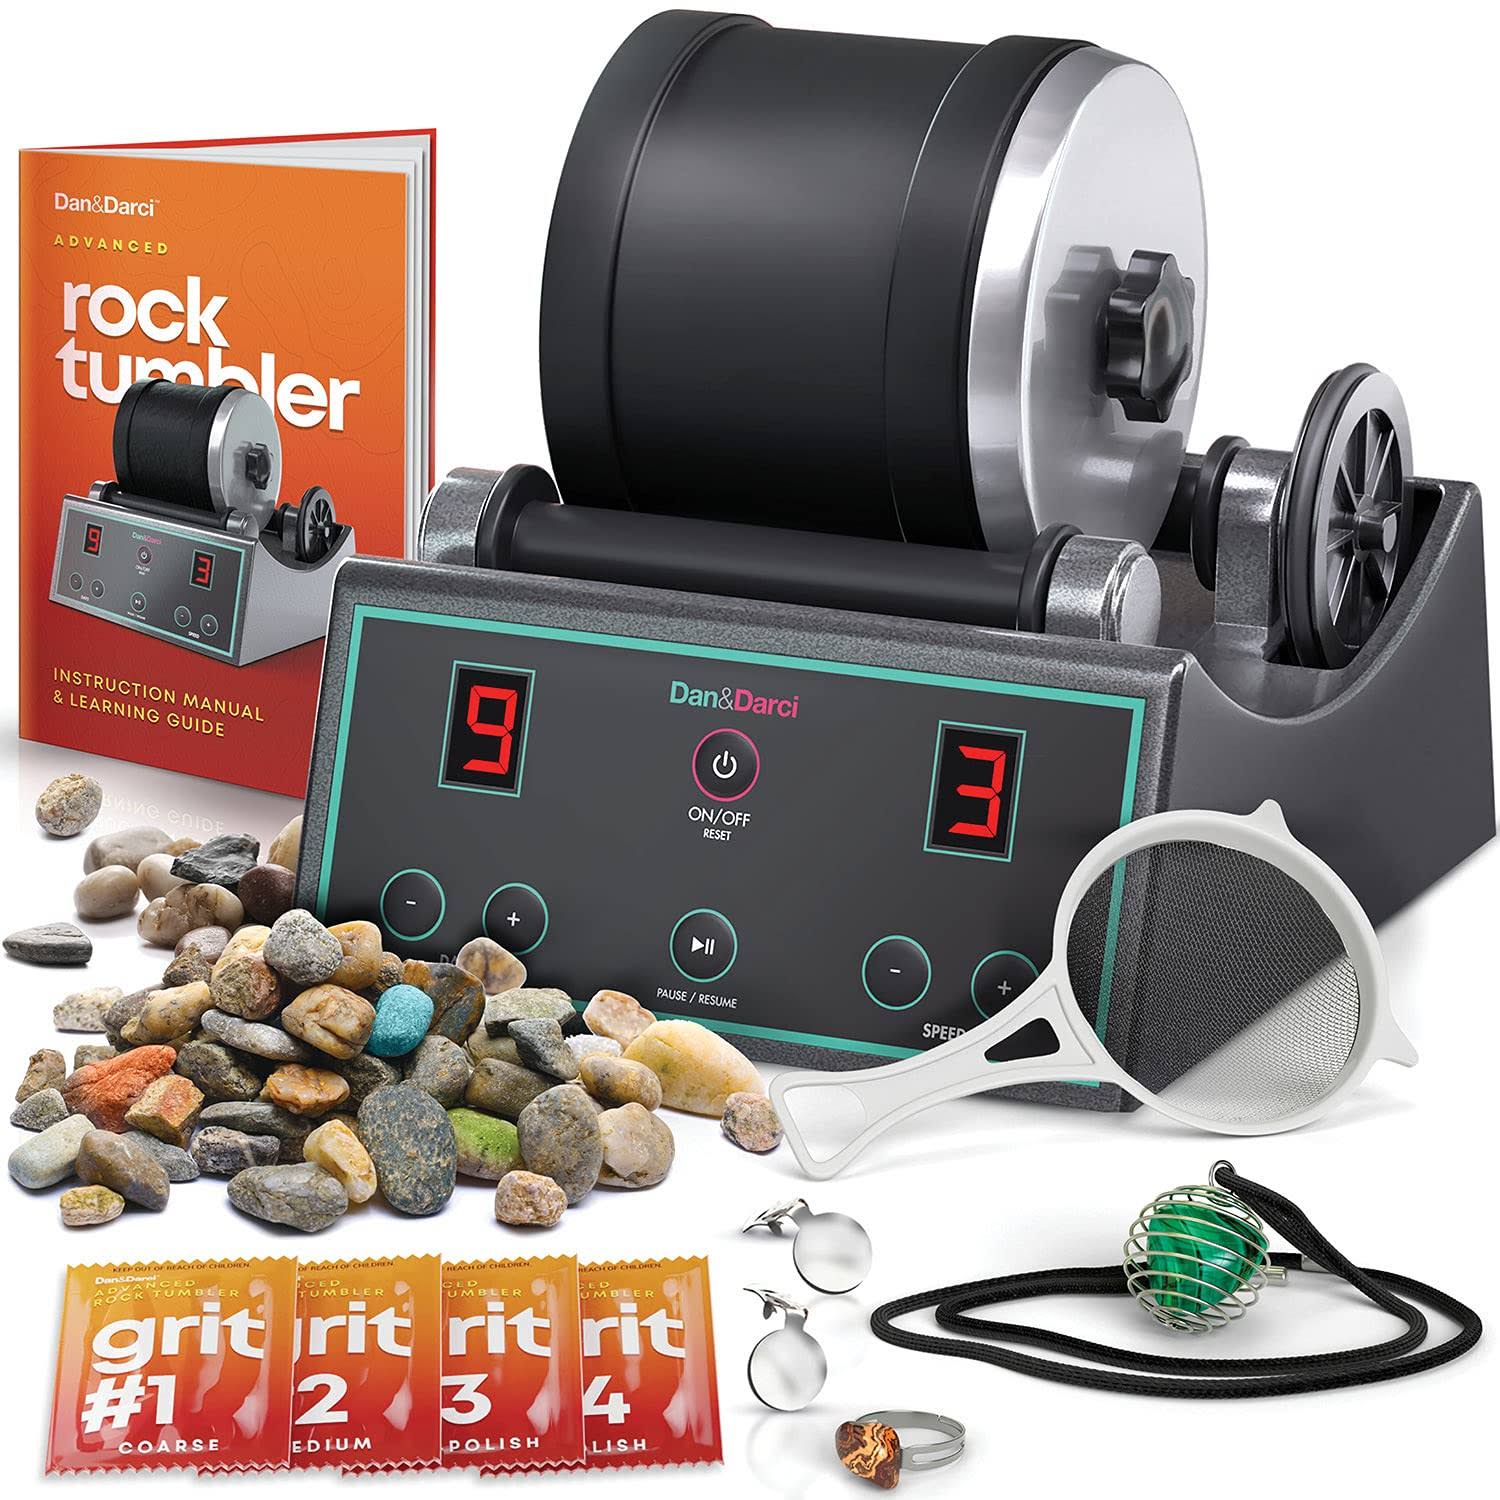 Advanced Professional Rock Tumbler Kit - with Digital 9-Day Polishing Timer & 3 Speed Settings - Turn Rough Rocks into Beautiful Gems : Great